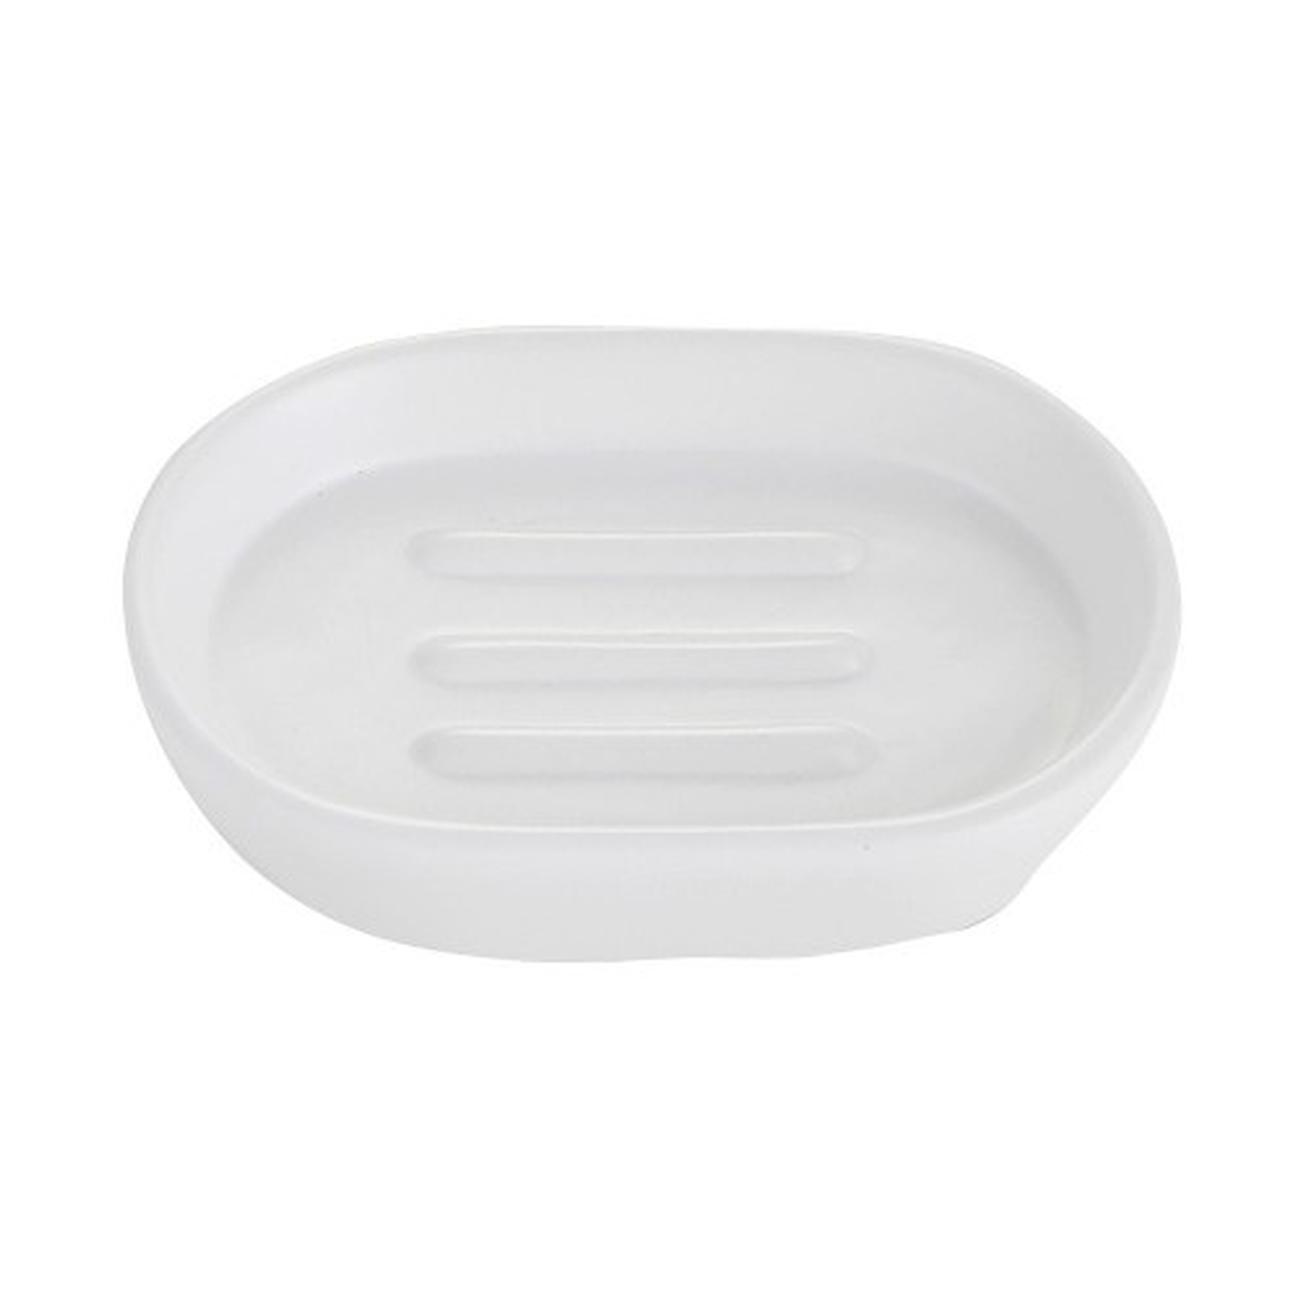 valet-ceramic-soap-dish-white - Valet Ceramic Soap Dish White